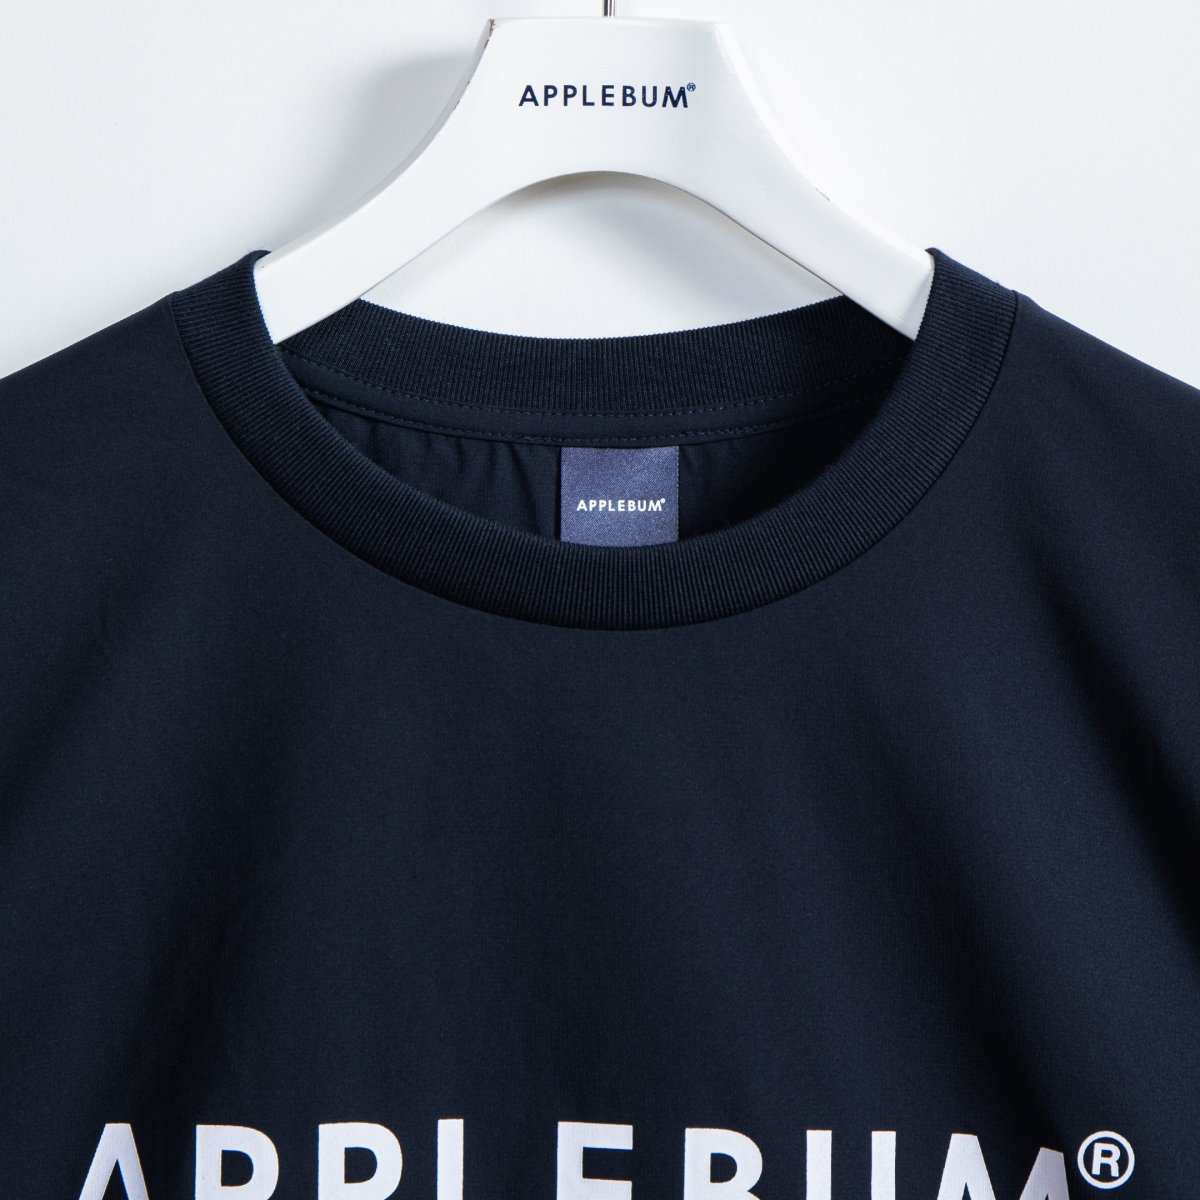 APPLEBUM | Multi-Function T-shirt | APPLEBUM正規取扱いショップ